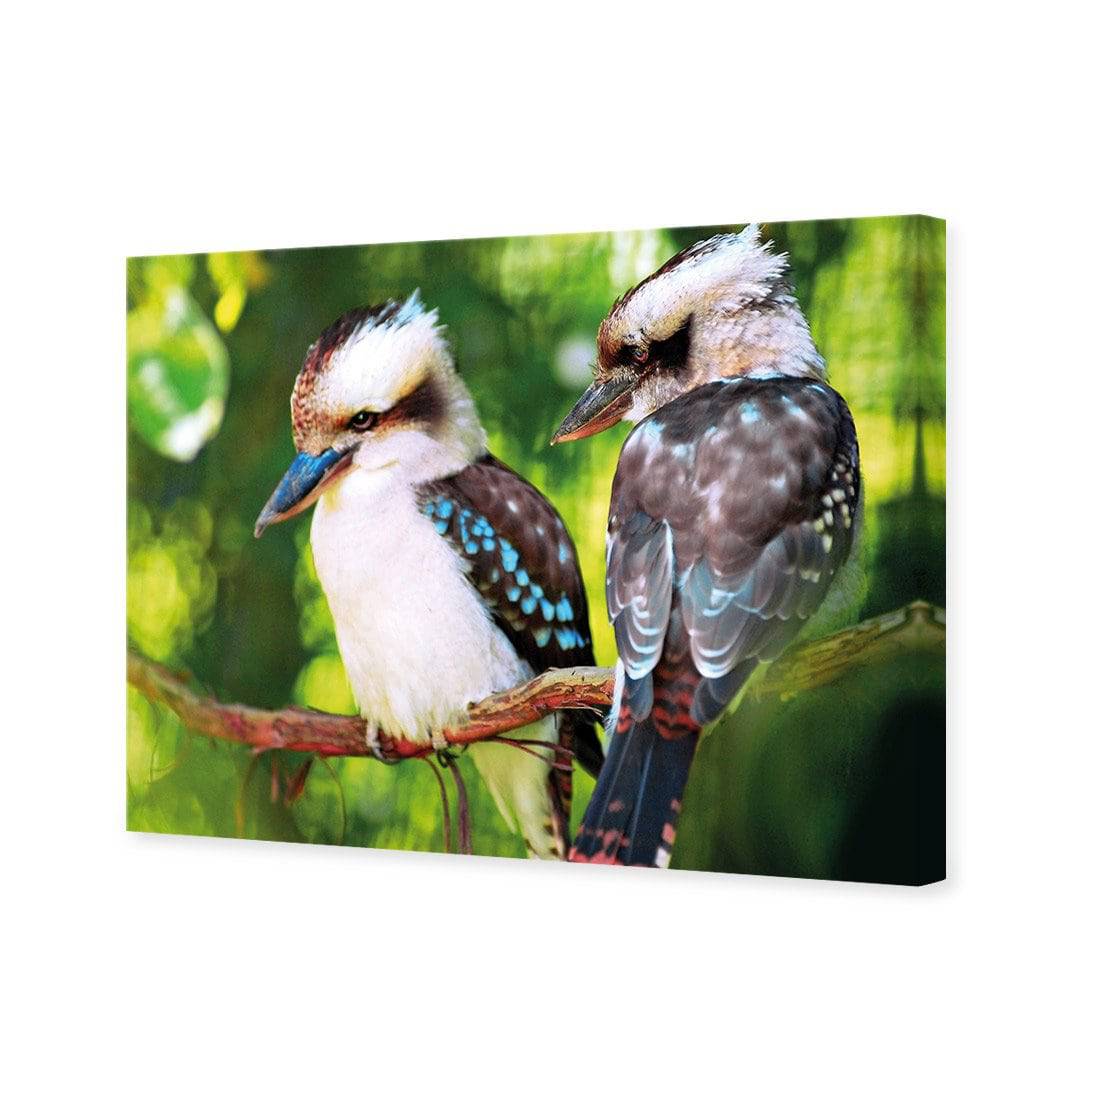 Kookaburra Pair Canvas Art-Canvas-Wall Art Designs-45x30cm-Canvas - No Frame-Wall Art Designs